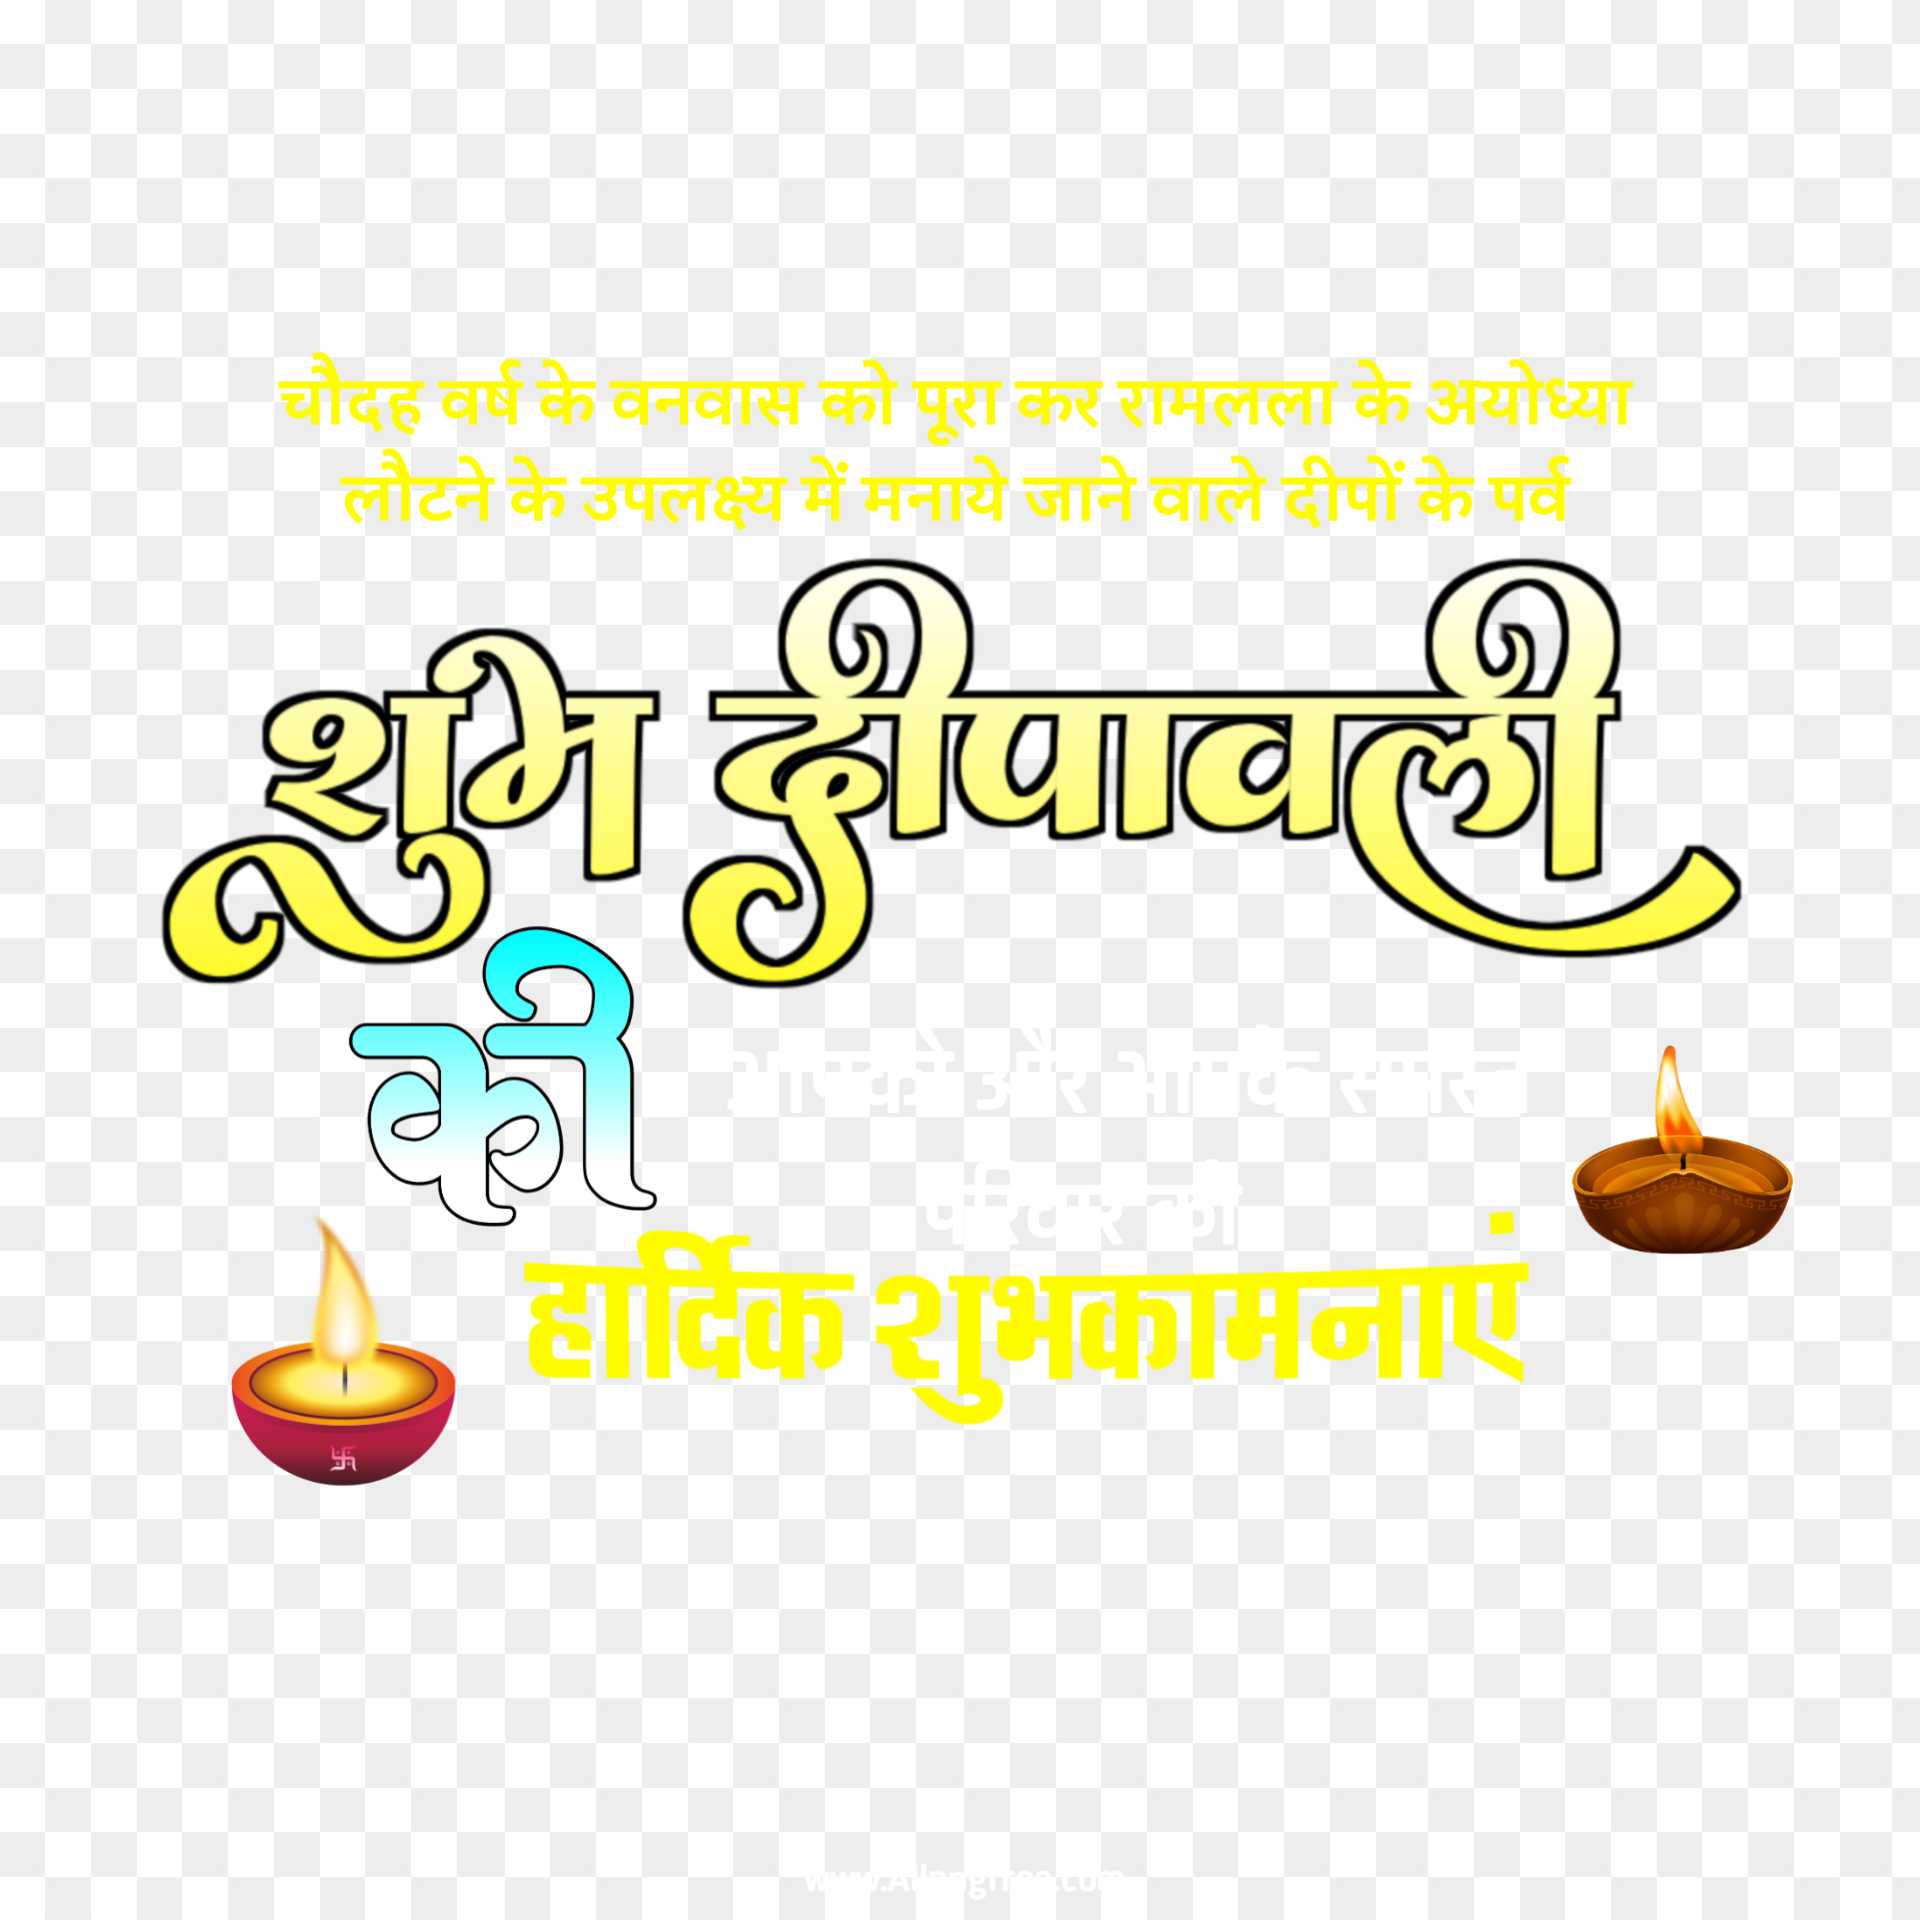 Dipawali ki hardik shubhkamnaen text PNG images download